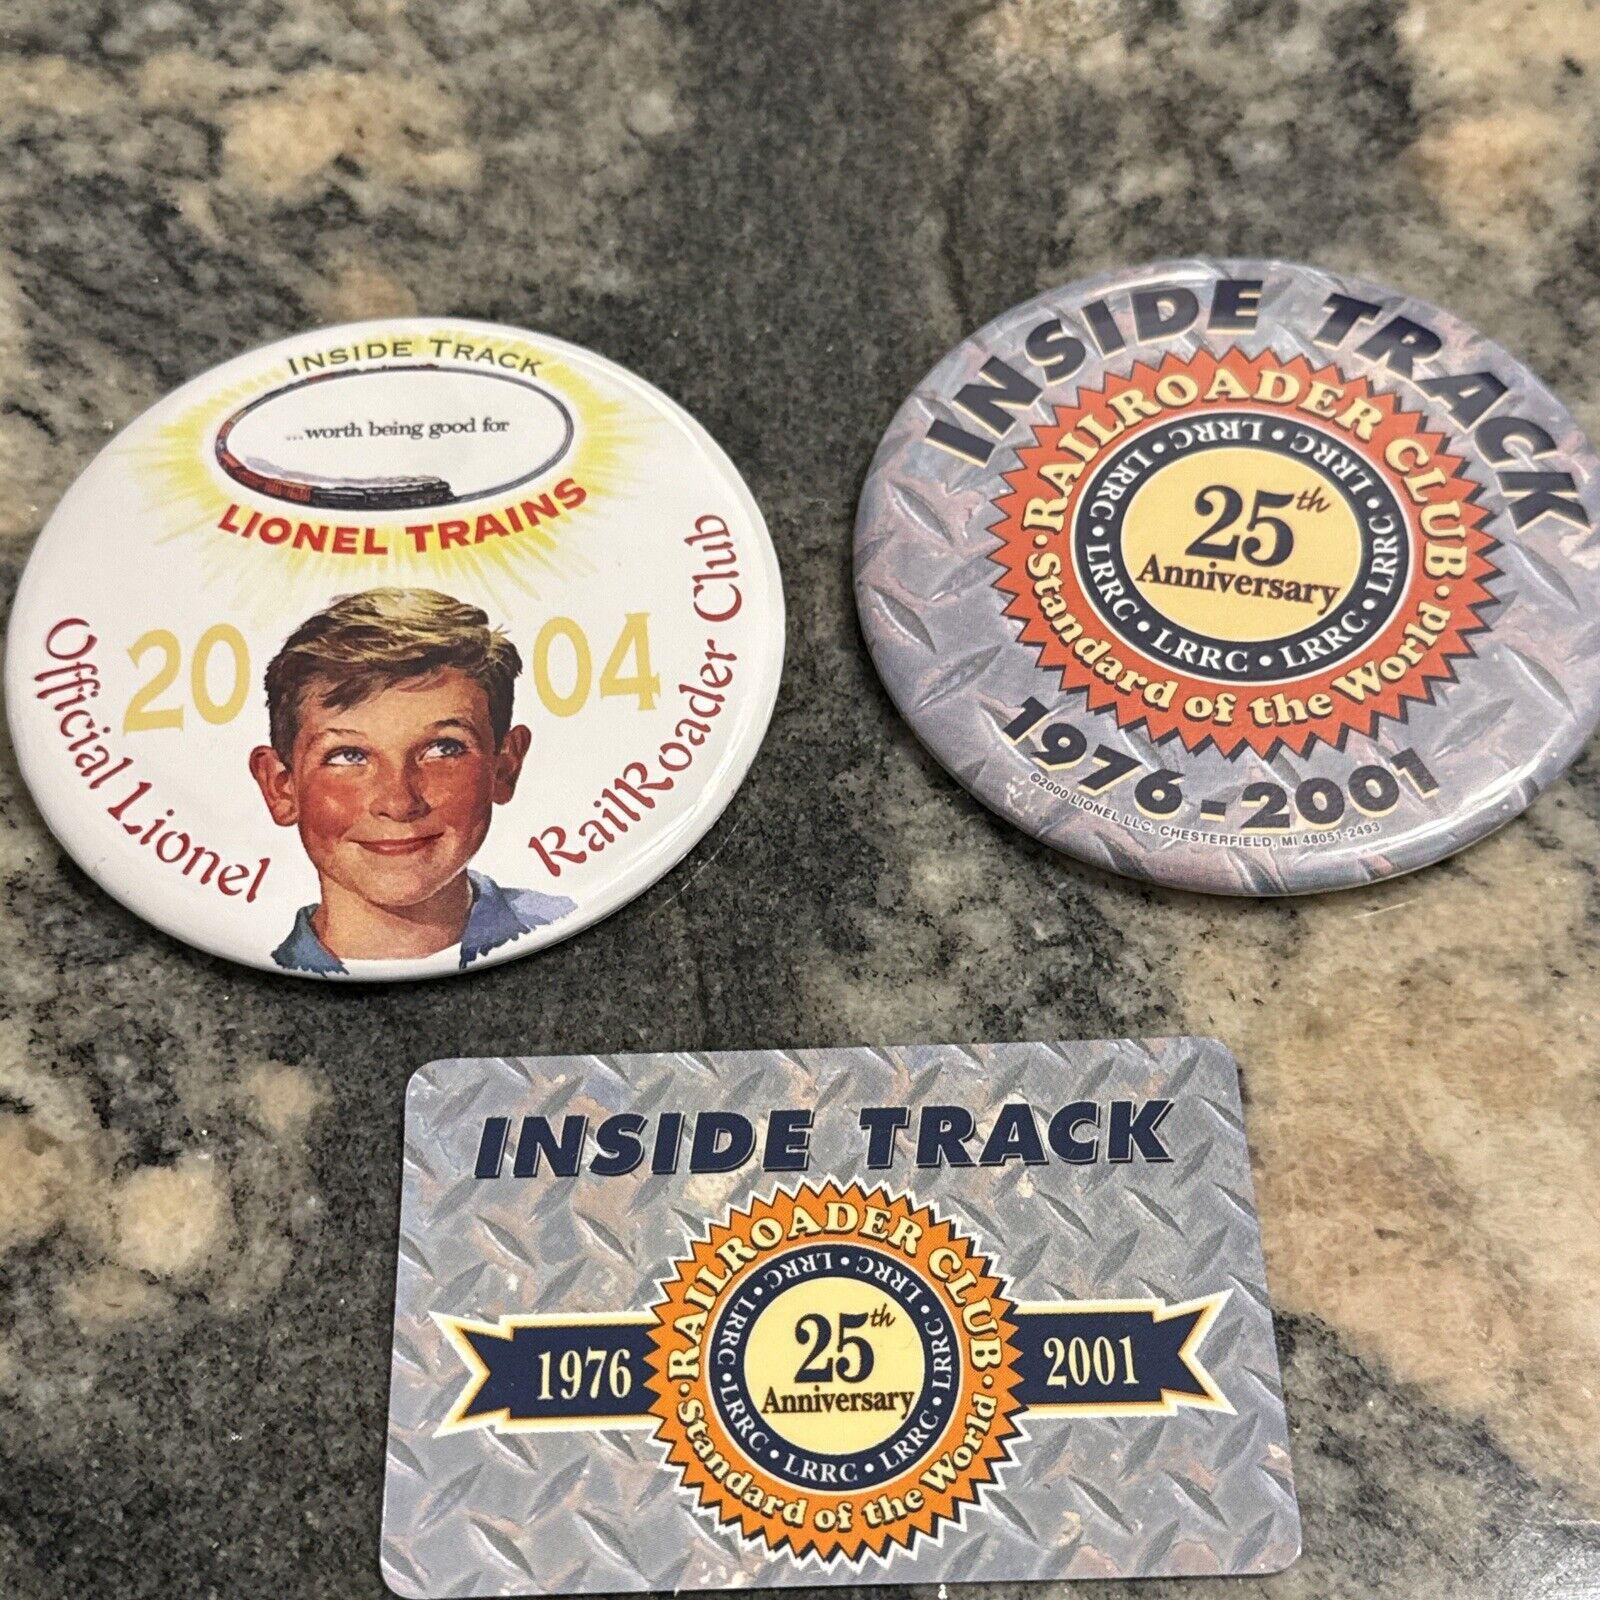 Lot 2 Lionel Trains Inside Track & Railroader Club Button Pins Rr Member Card 25